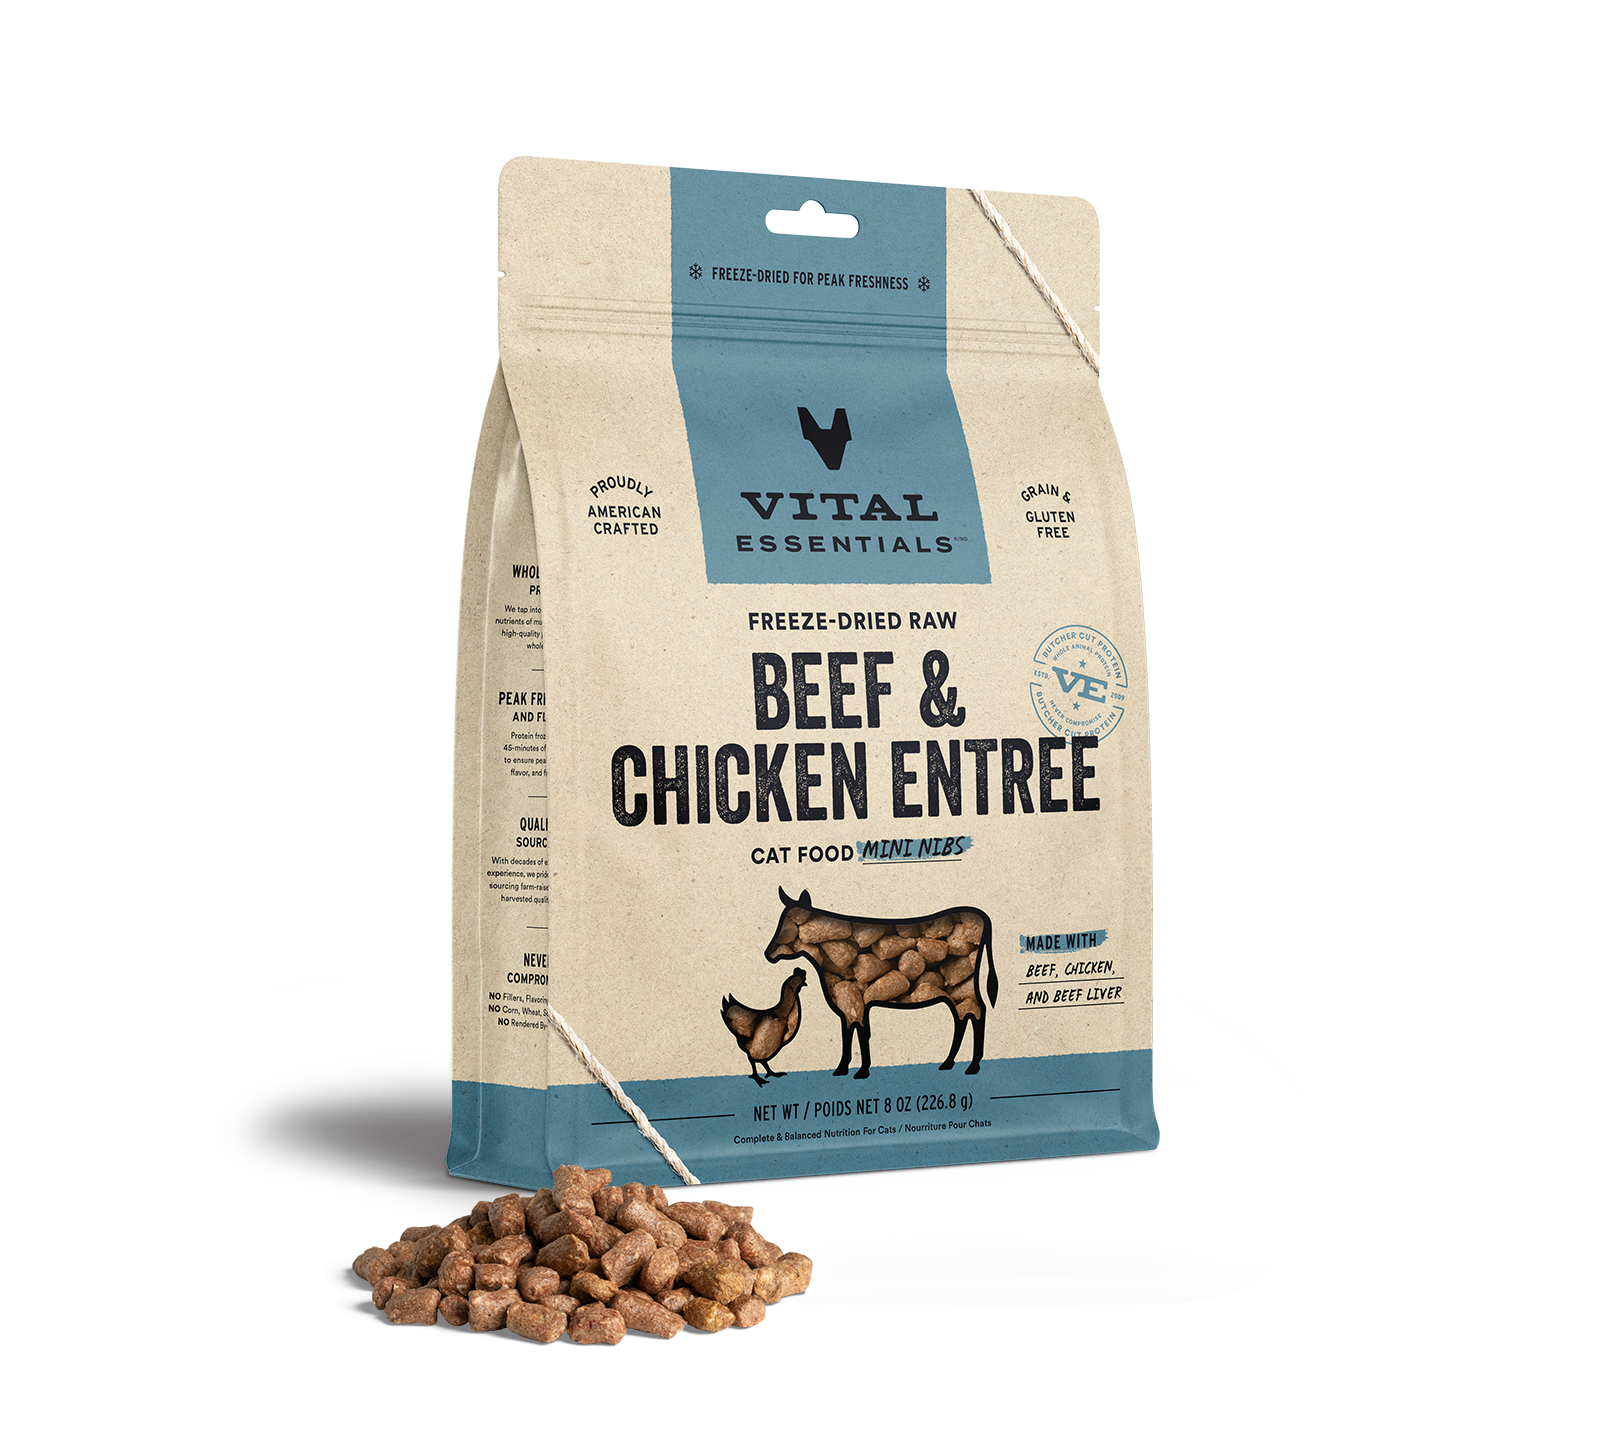 Vital Essentials Freeze-Dried Raw Beef & Chicken Entree Cat Food Mini Nibs, 8 oz - Items on Sale Now